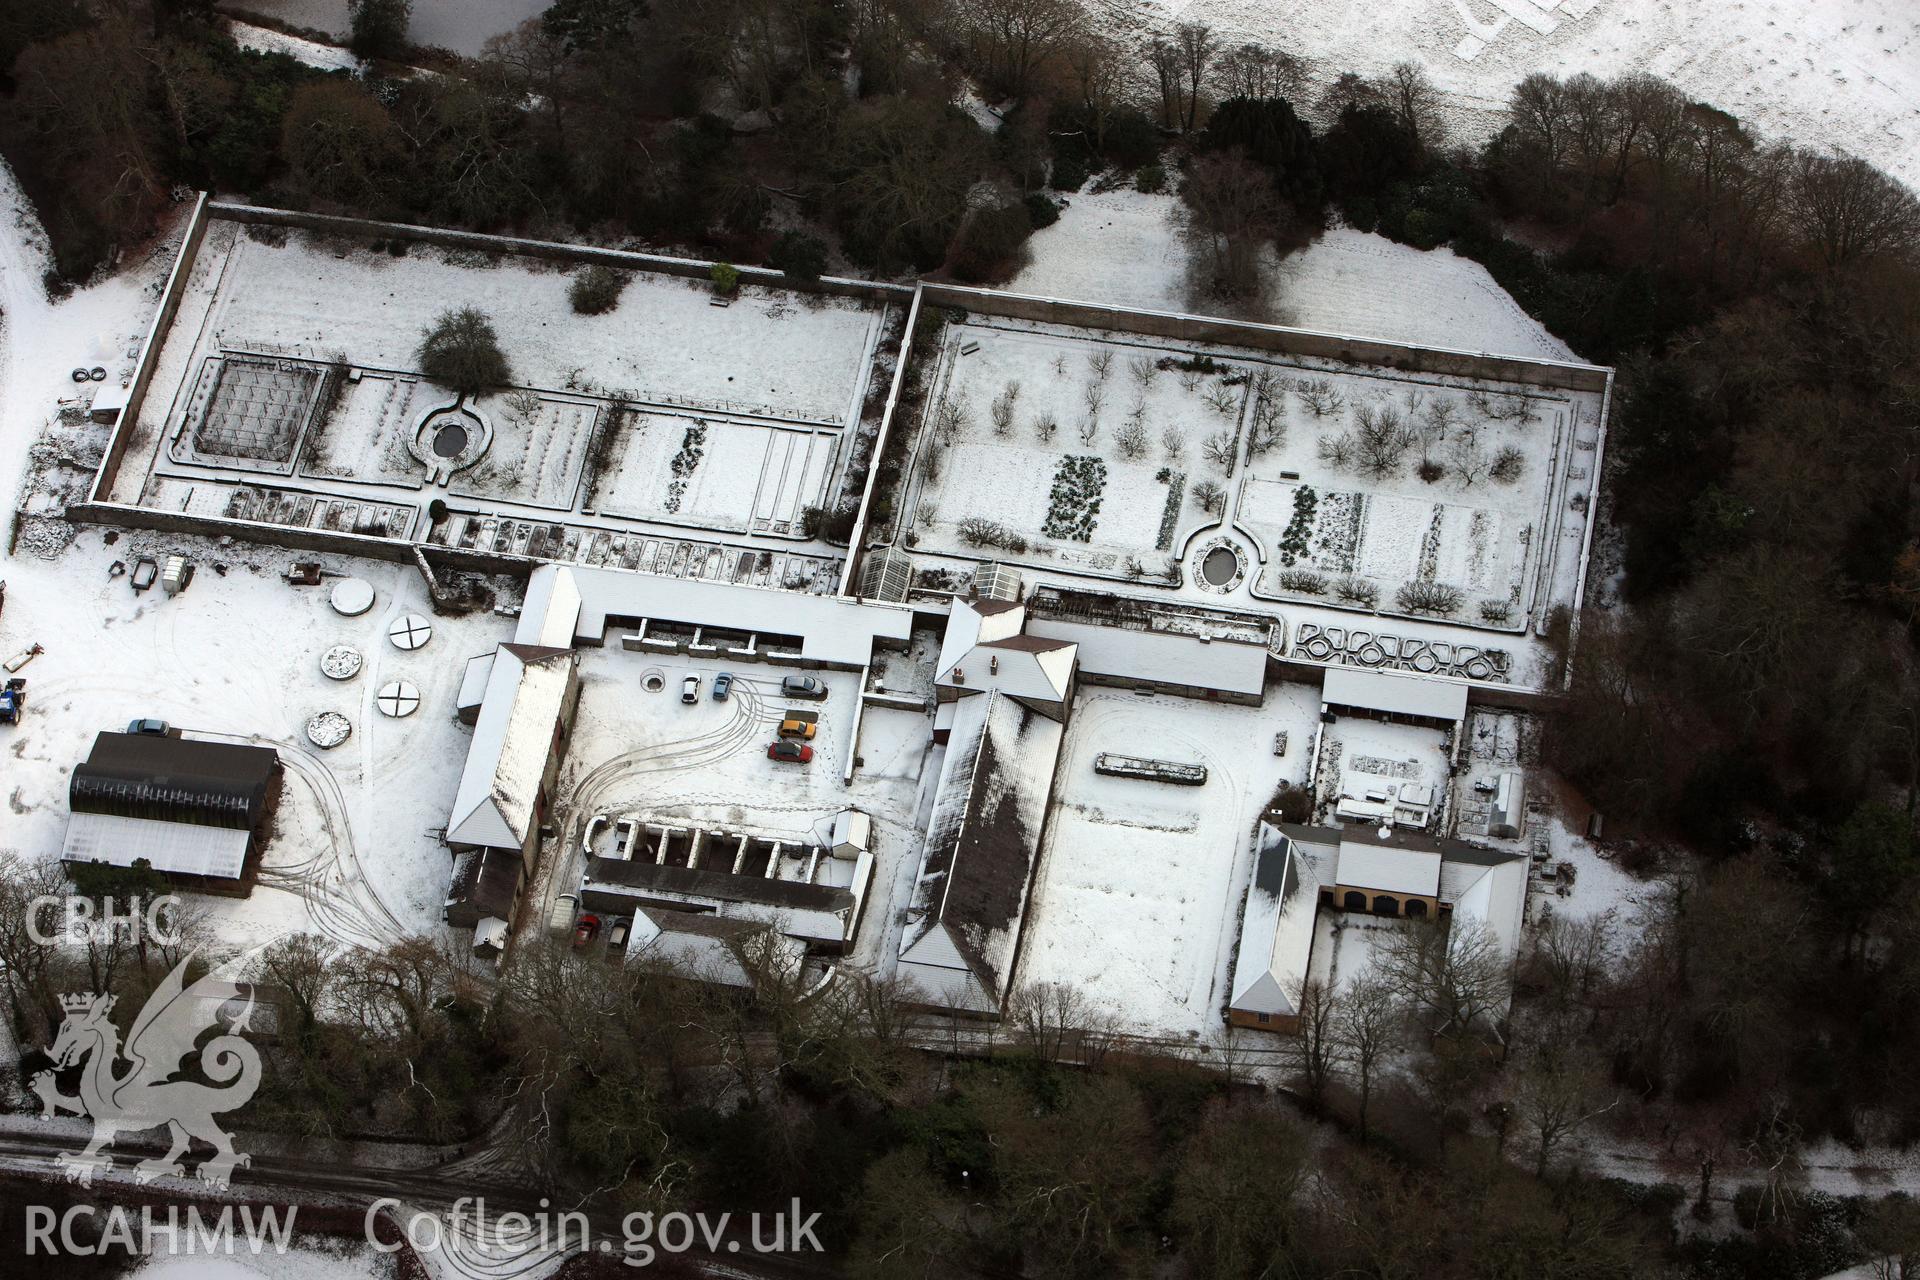 RCAHMW colour oblique aerial photograph of Llanerchaeron under snow, by Toby Driver, 02/12/2010.